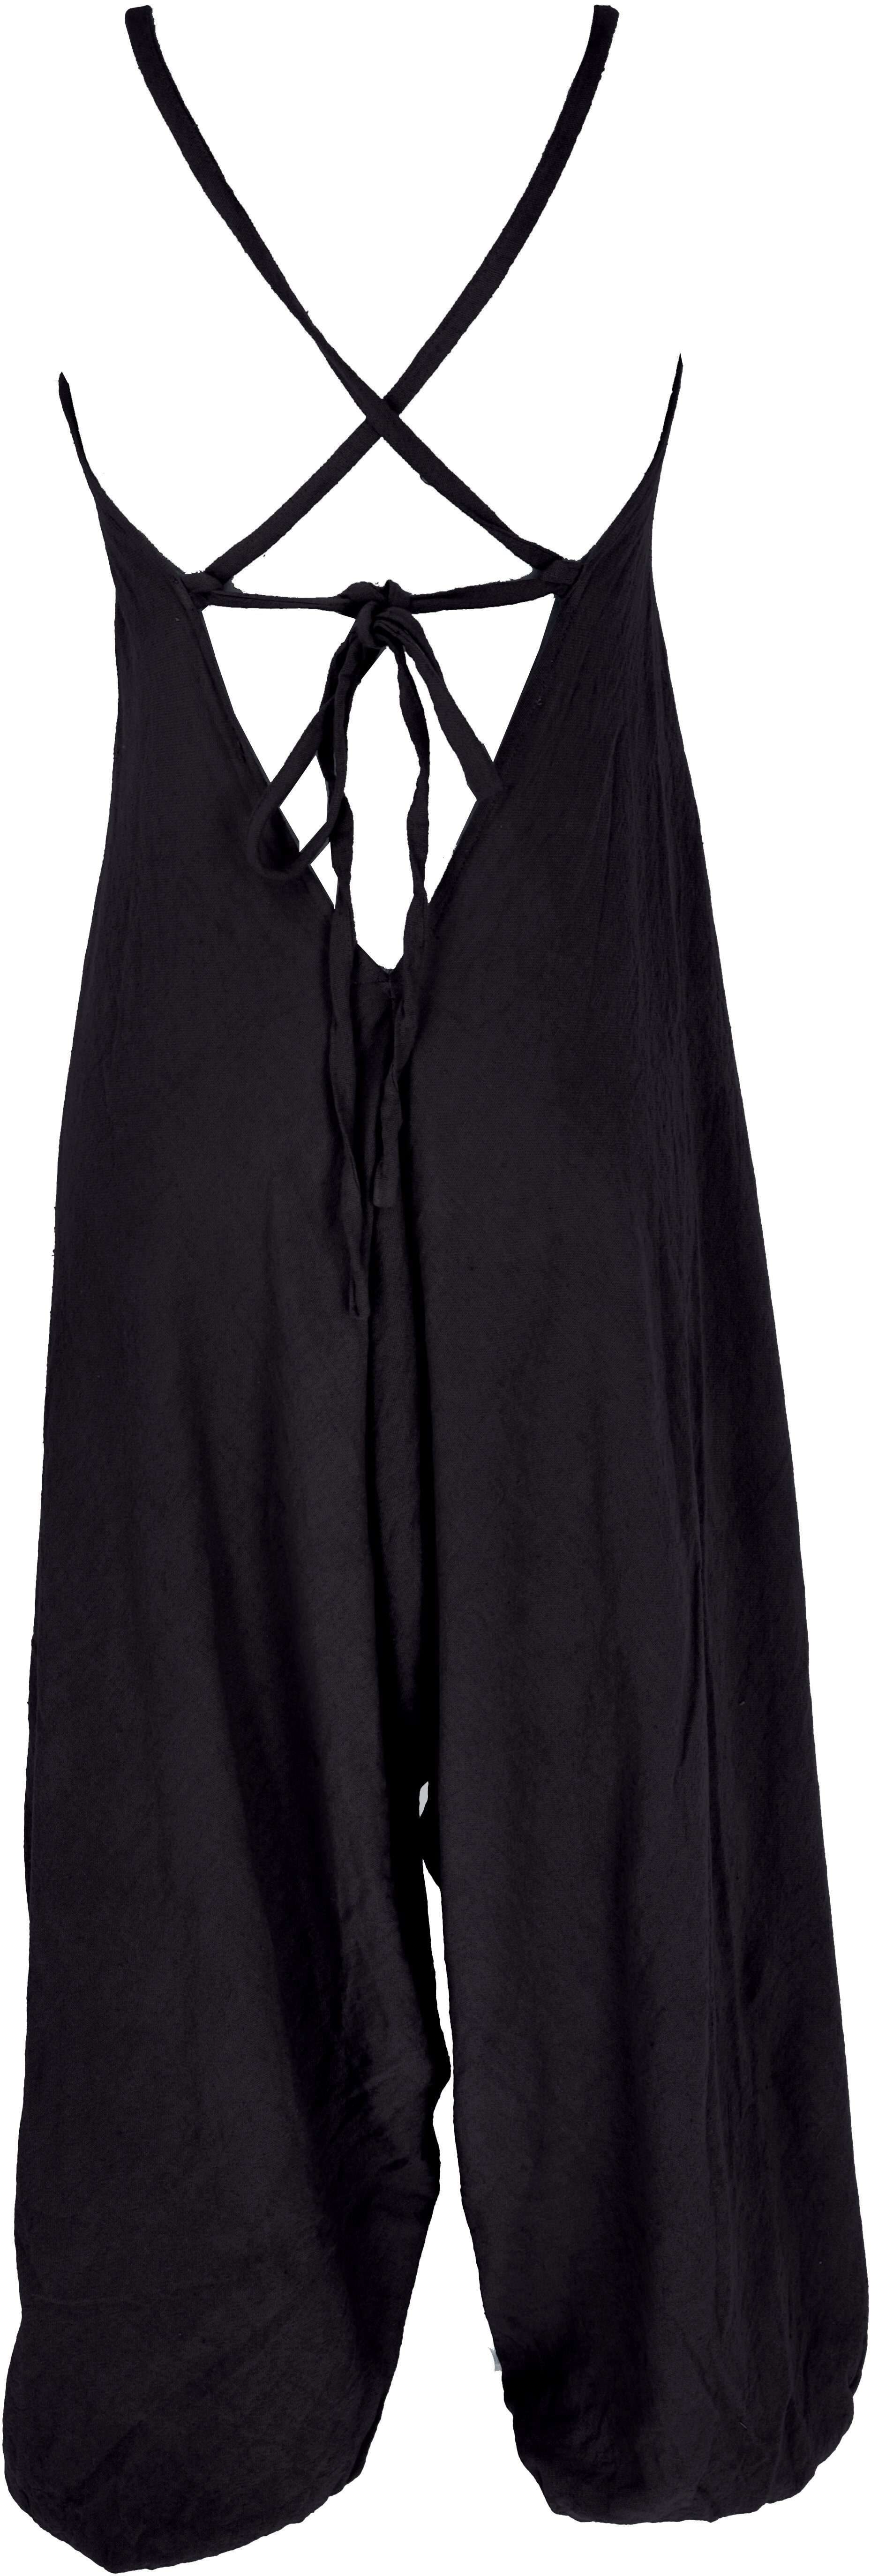 Relaxhose Jumpsuit, Guru-Shop rückenfreie Sommer schwarz Pluderhose,.. Boho Bekleidung alternative